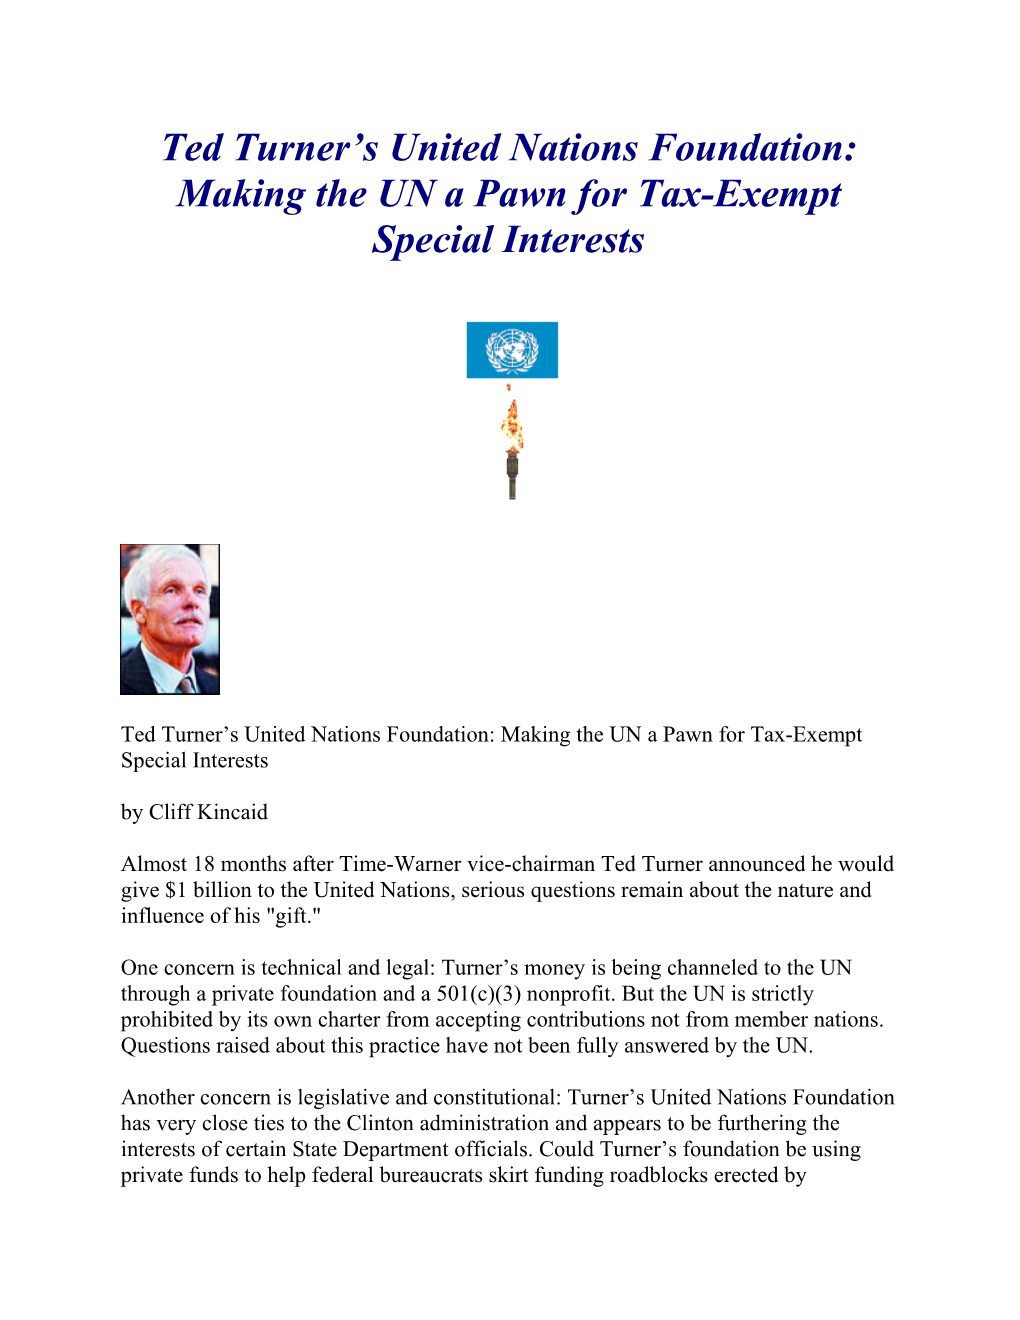 Ted Turner Offers $35 Million to Help U.S. Pay U.N. Dues